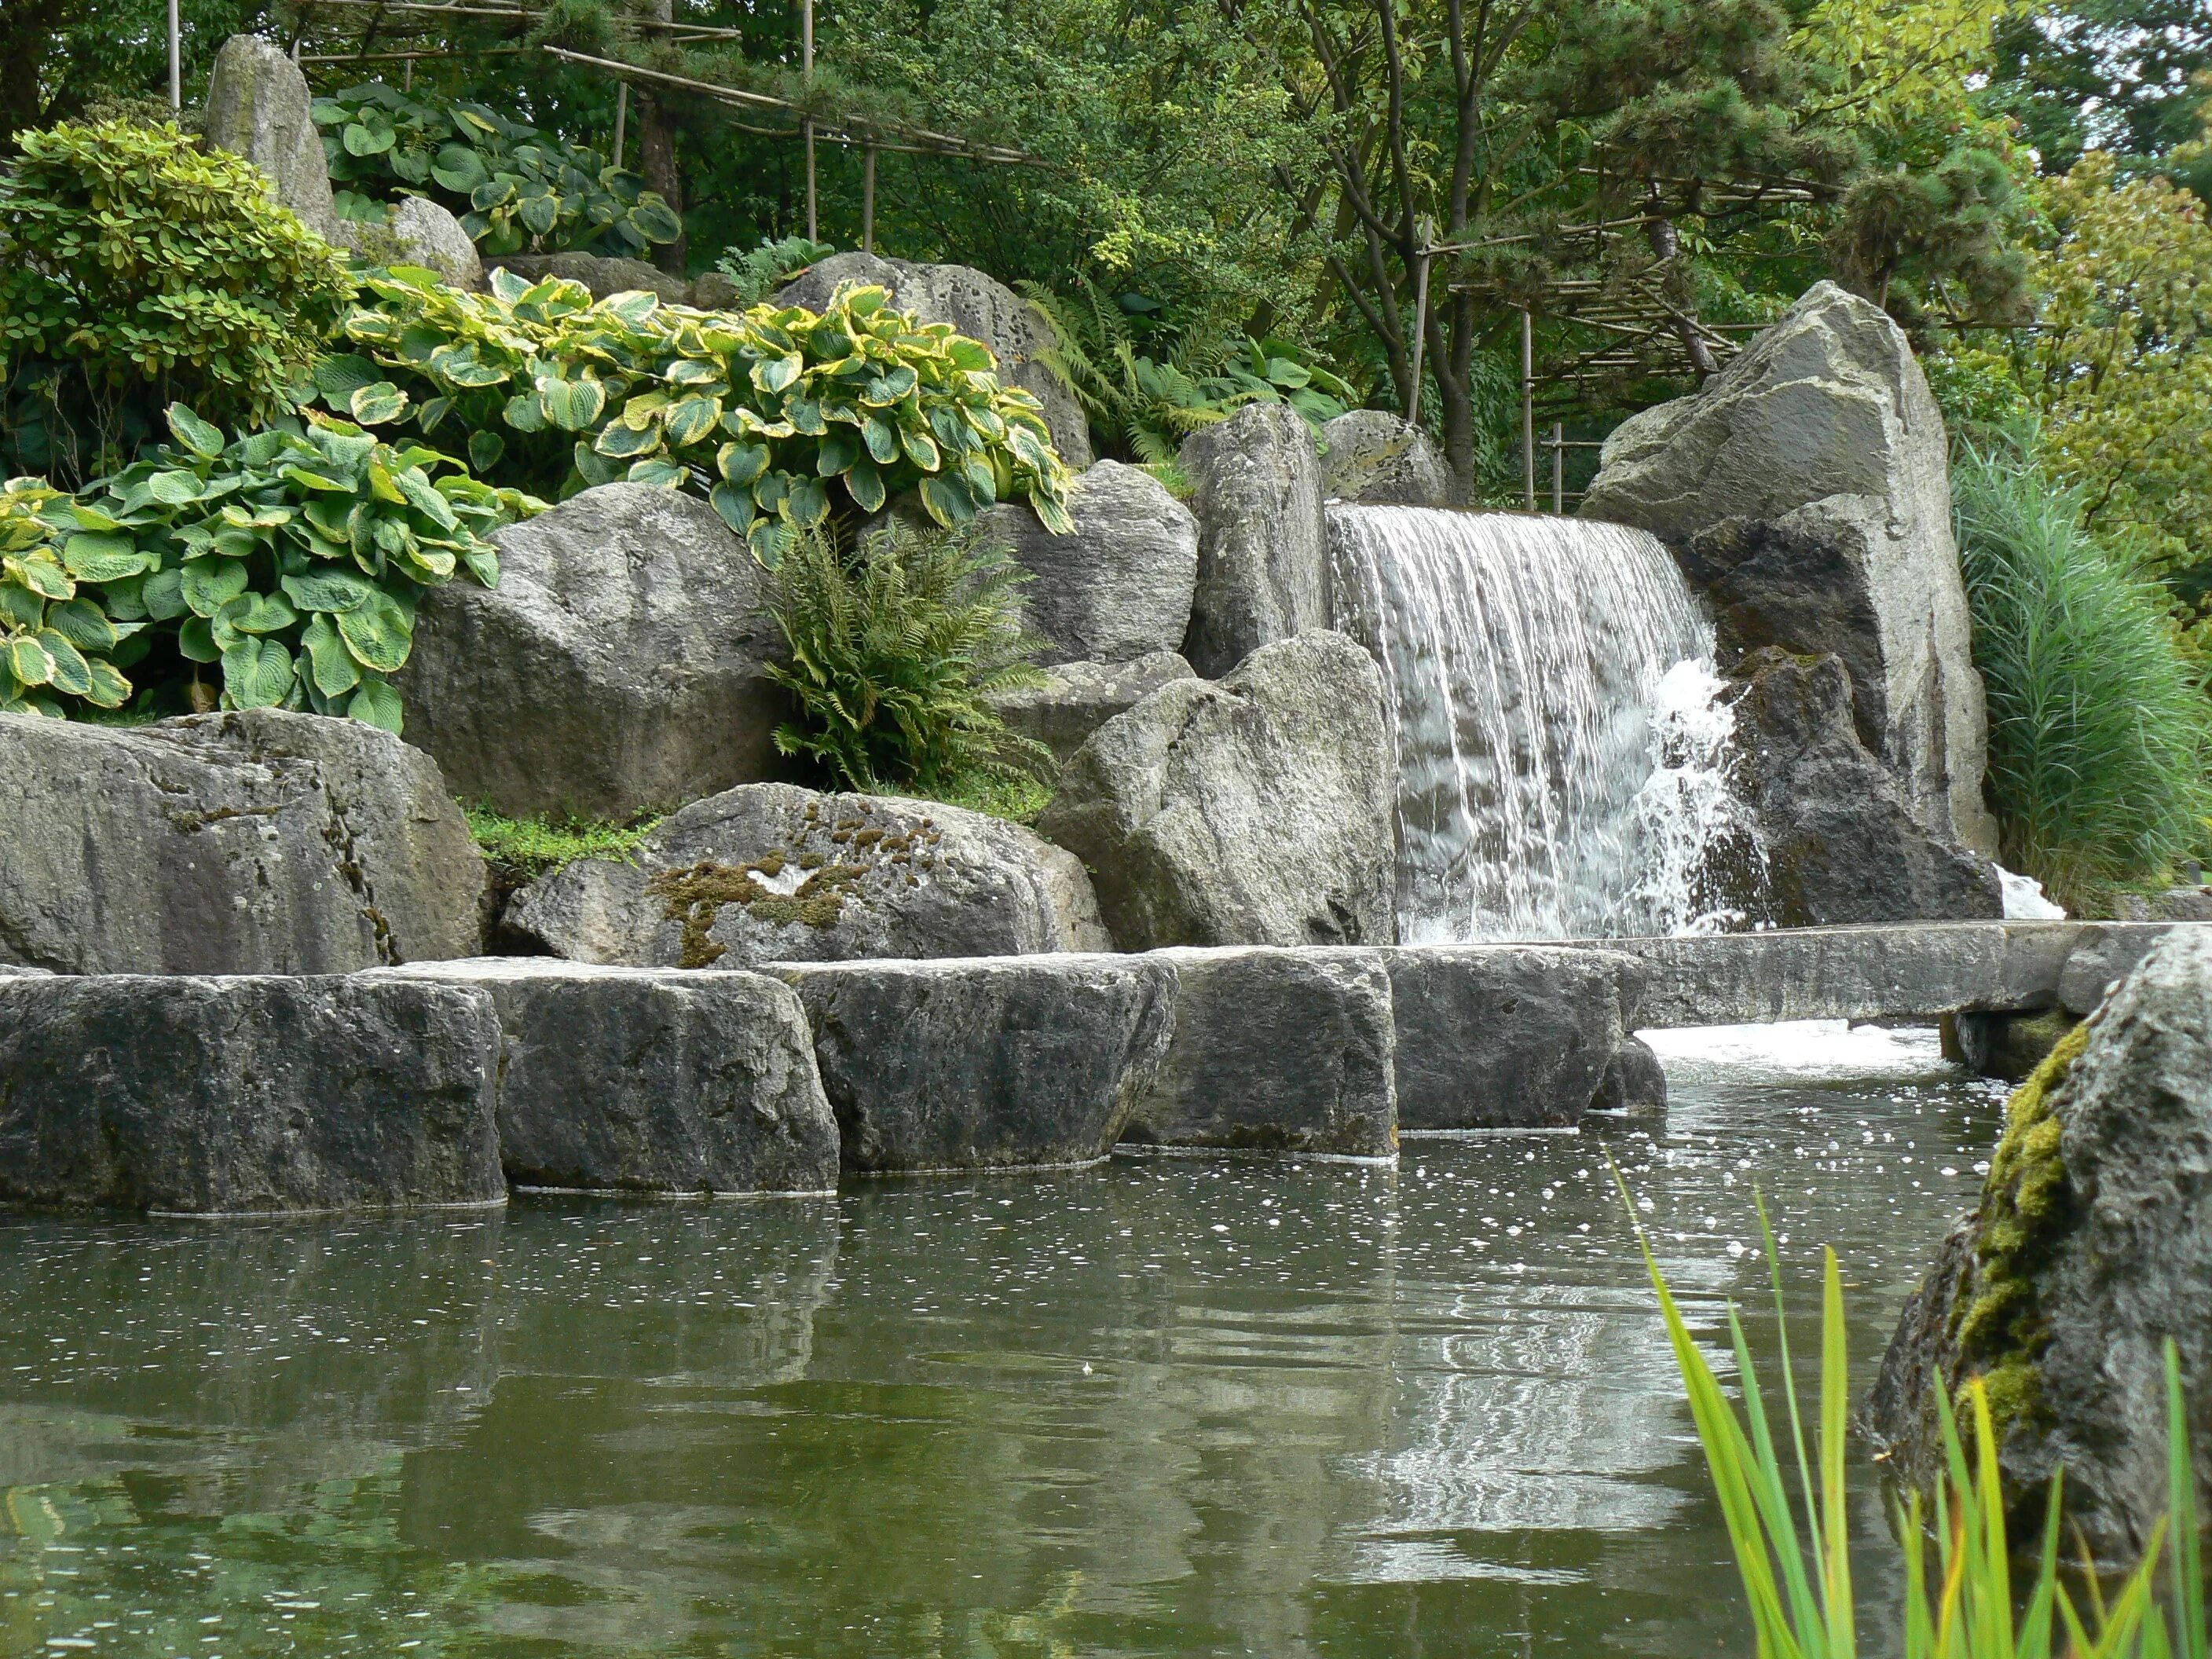 Дворец водопадов. Японский сад Киото фонтан. Фонтан в саду Киото в Японии. Водопады японского сада. Киото. Киото сад каменный водопад.